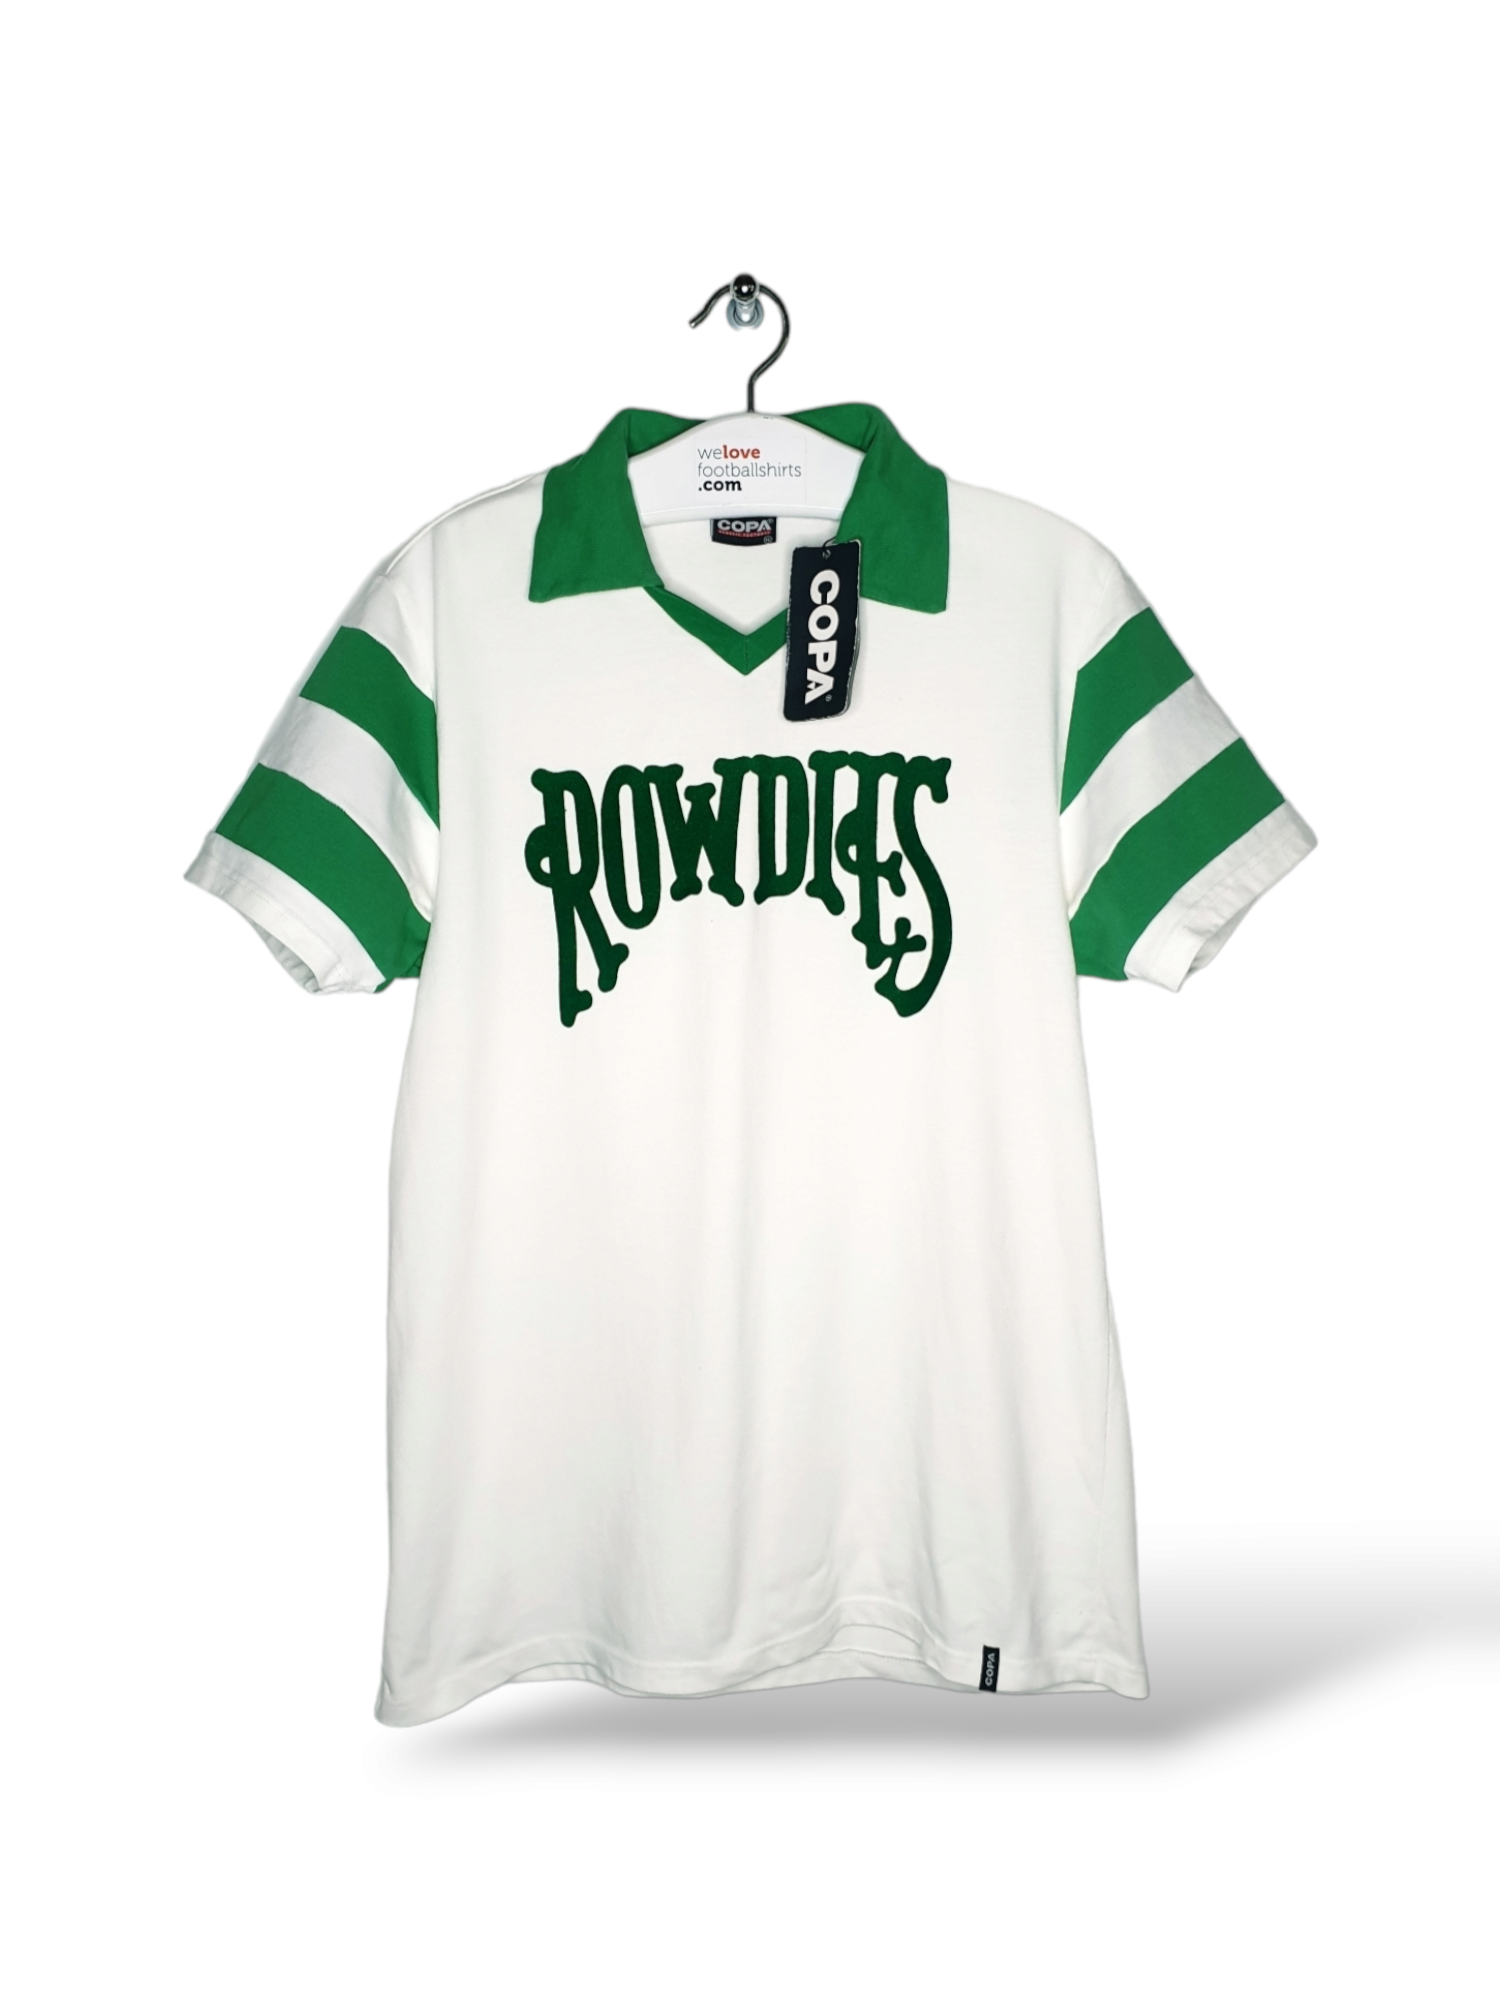 Tampa Bay Rowdies Home Camiseta de Fútbol 1981.